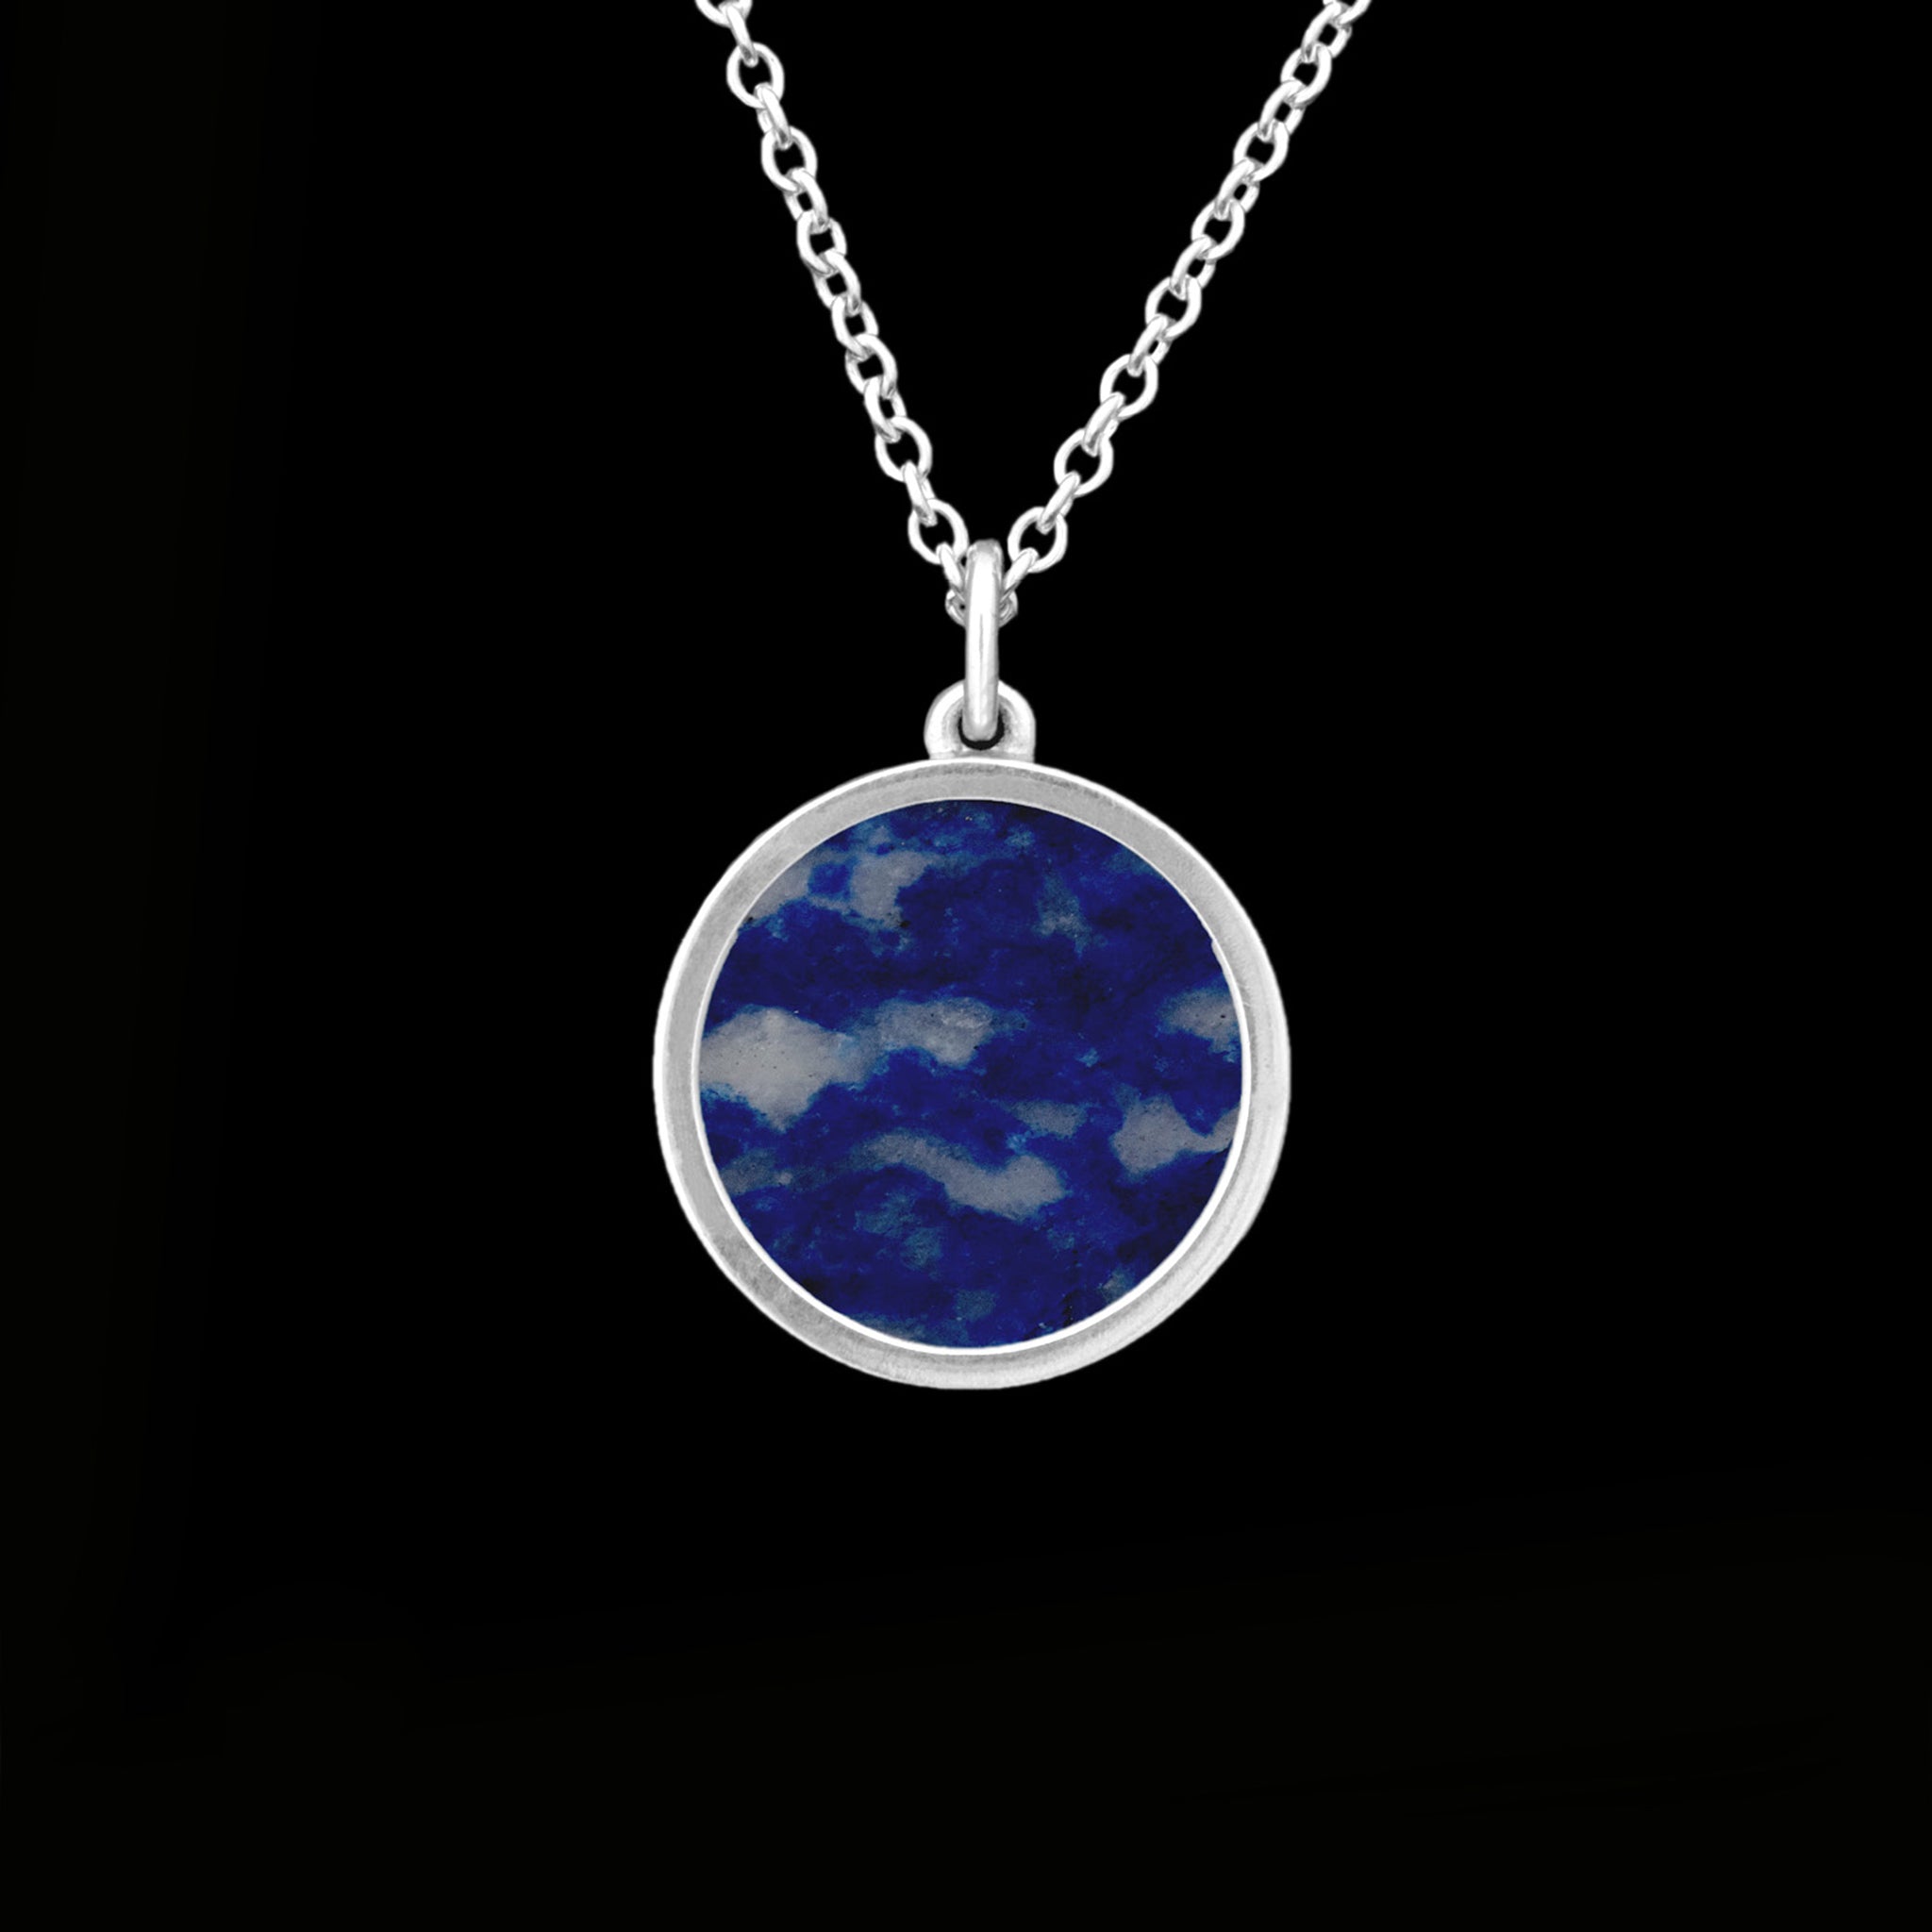 ROND pendant - Lapis-lazuli